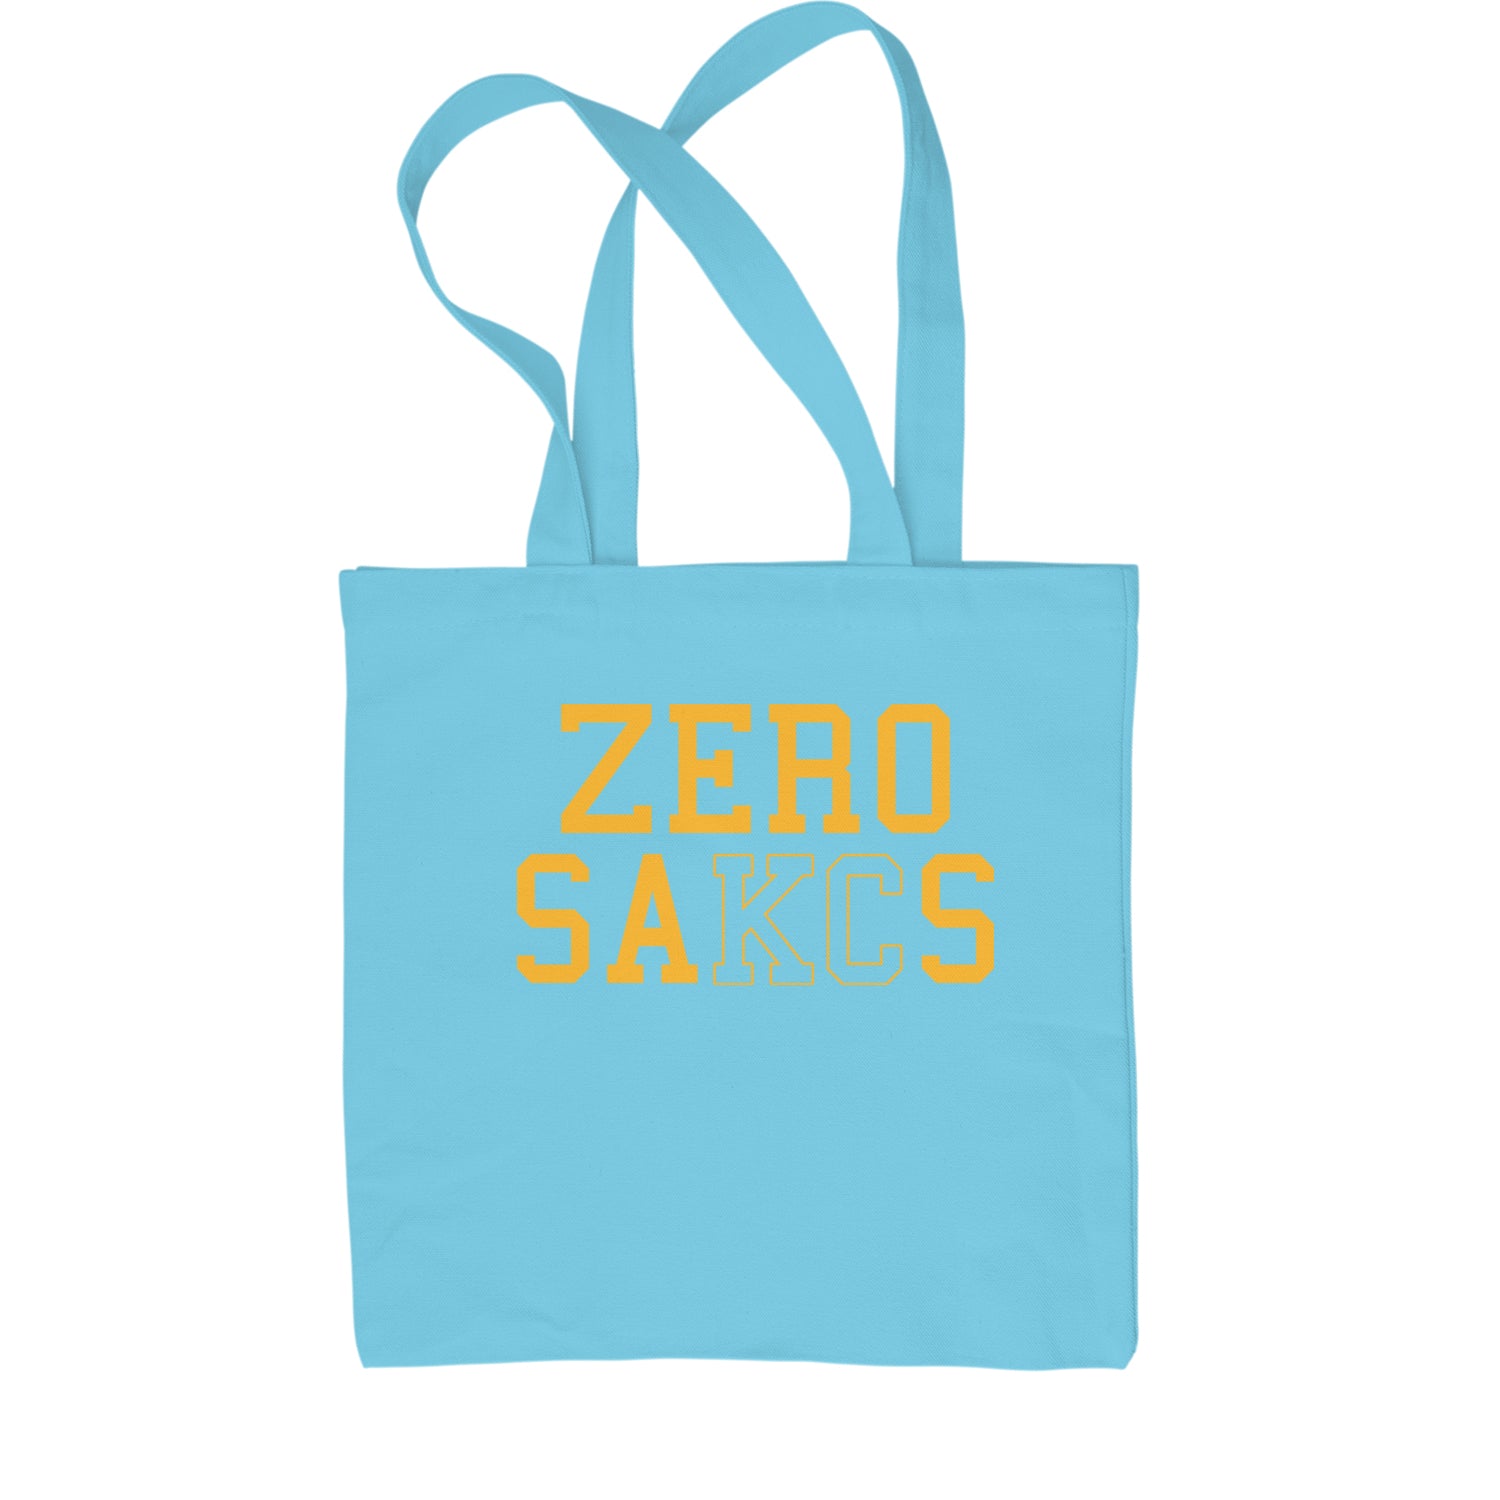 Zero Sacks Kansas City Shopping Tote Bag ball, brown, foot, football, kelc, orlando, patrick, sacks, sakcs by Expression Tees